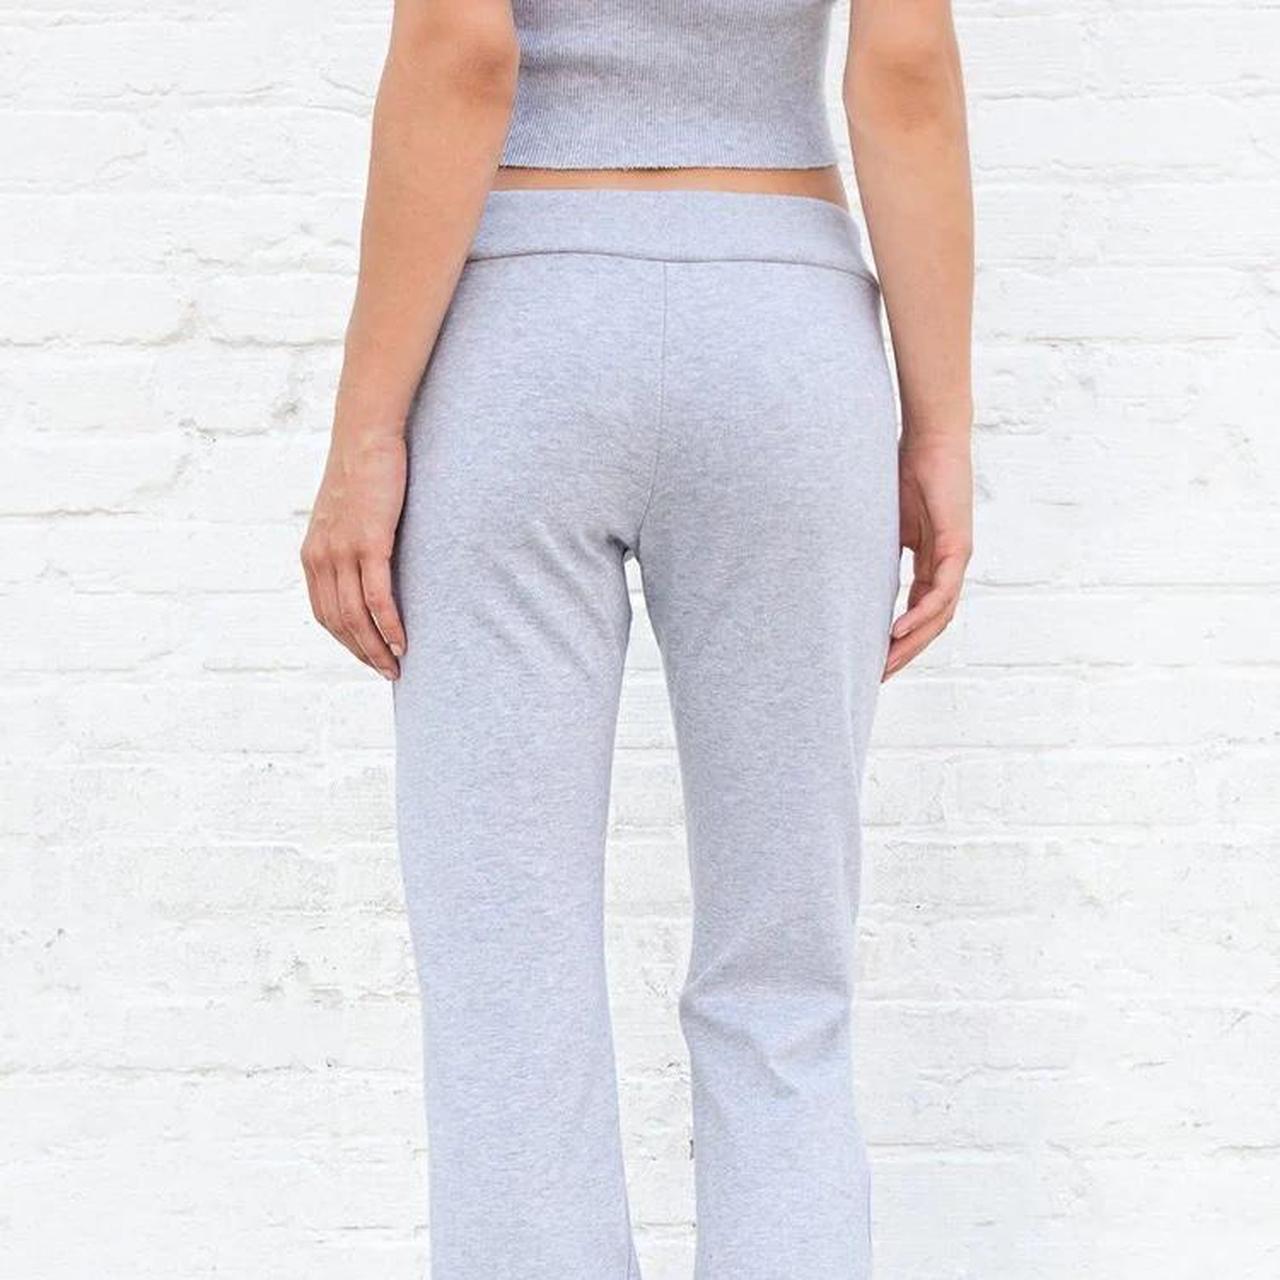 Brandy melville gray velour Hilary yoga pants